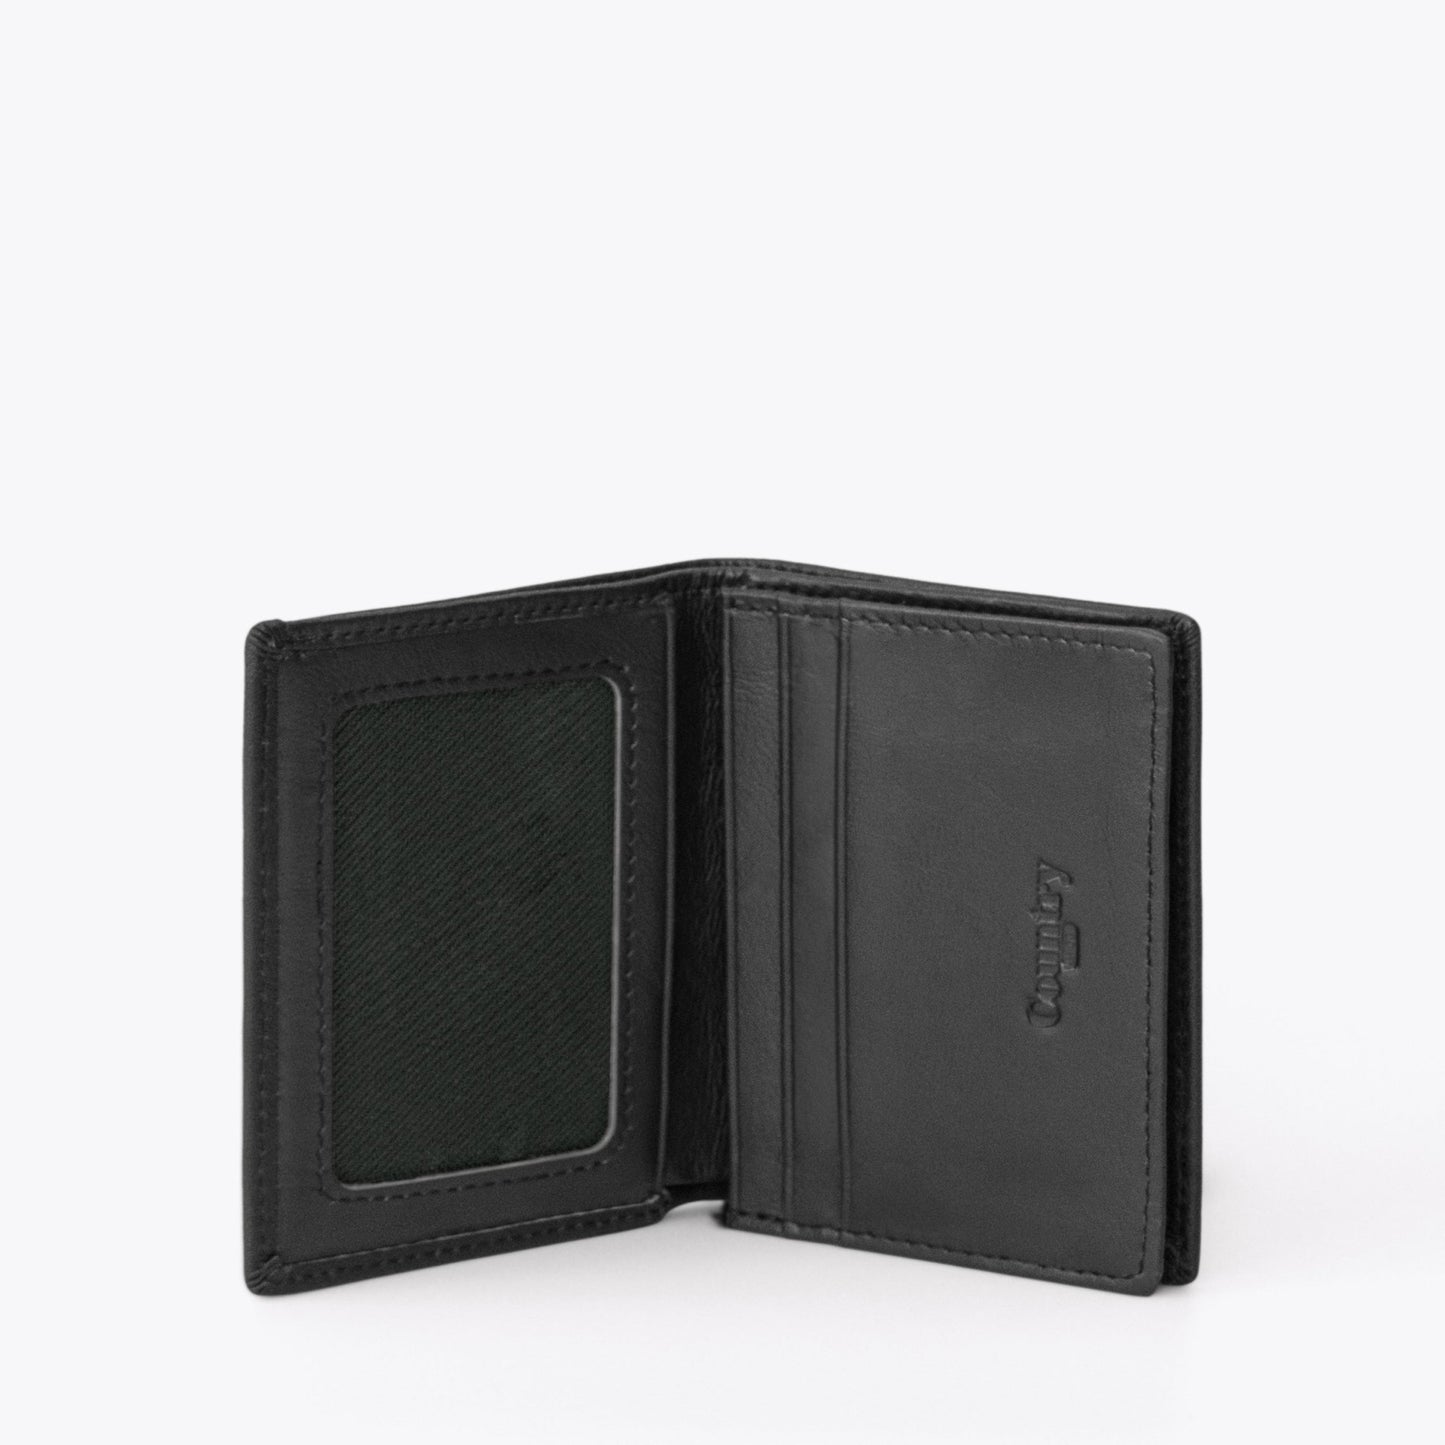 SEMPRE Mini Wallet - Black - www.countryhide.com